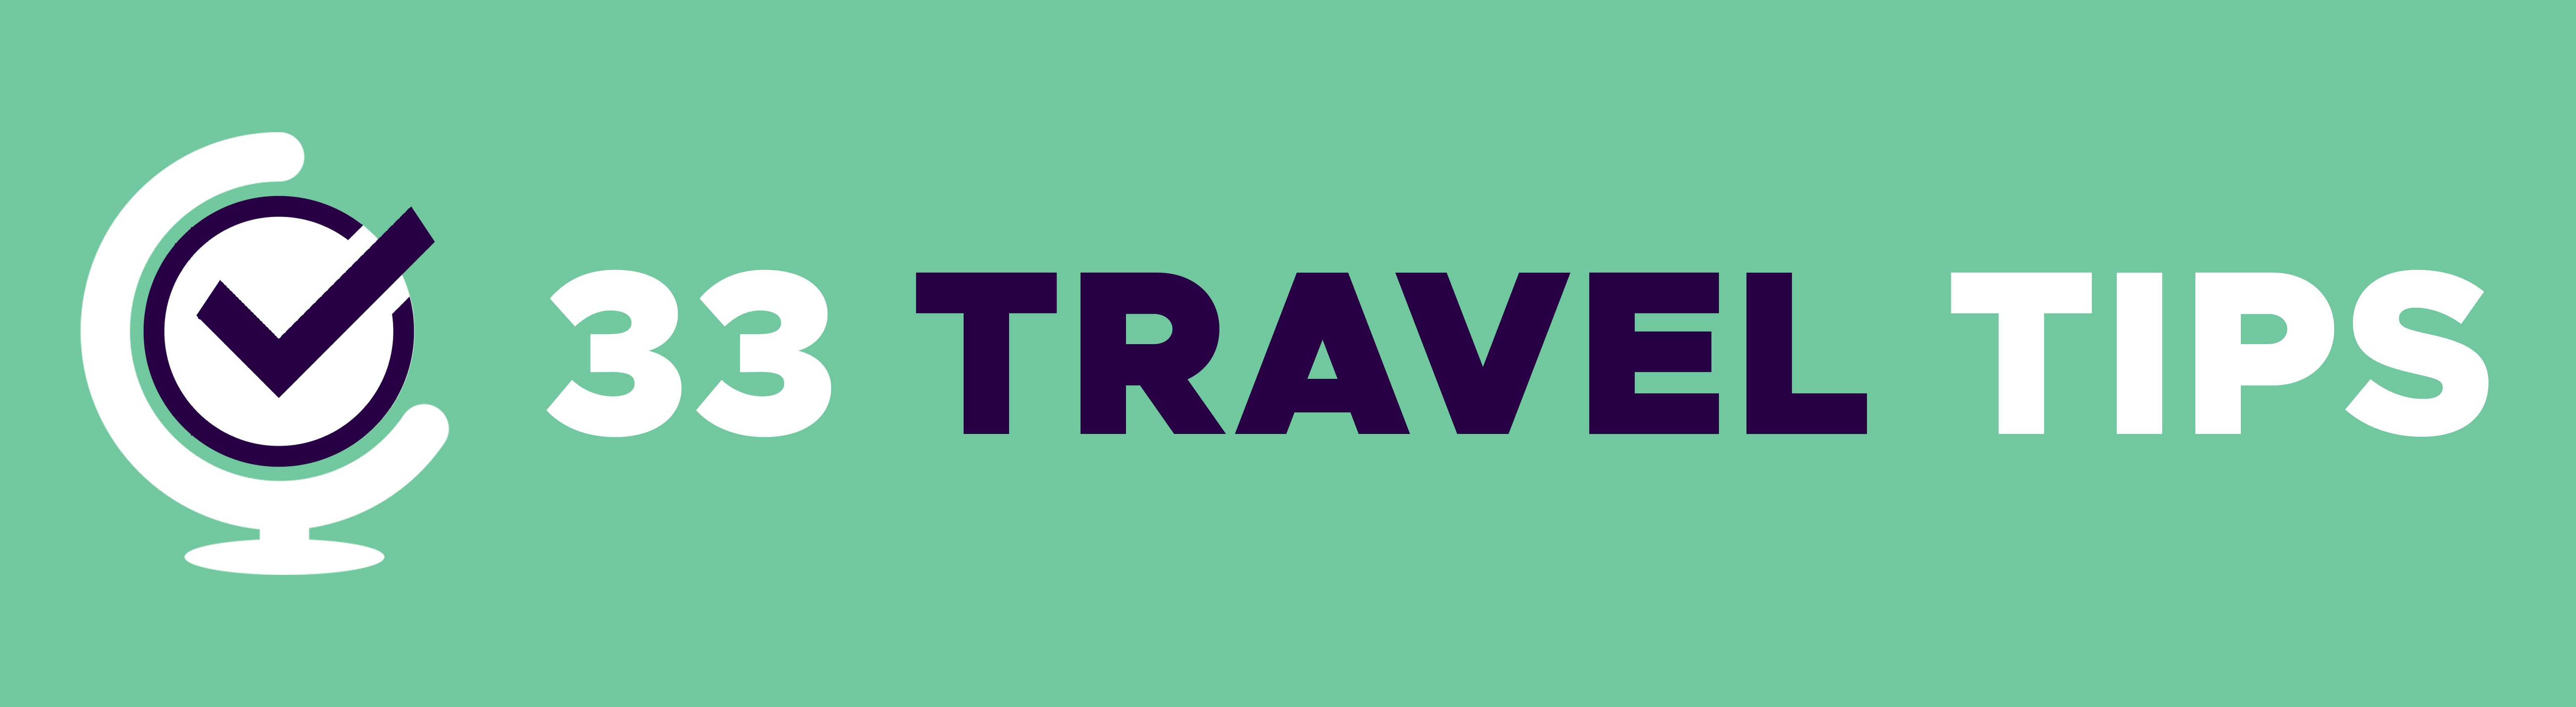 33 Travel Tips